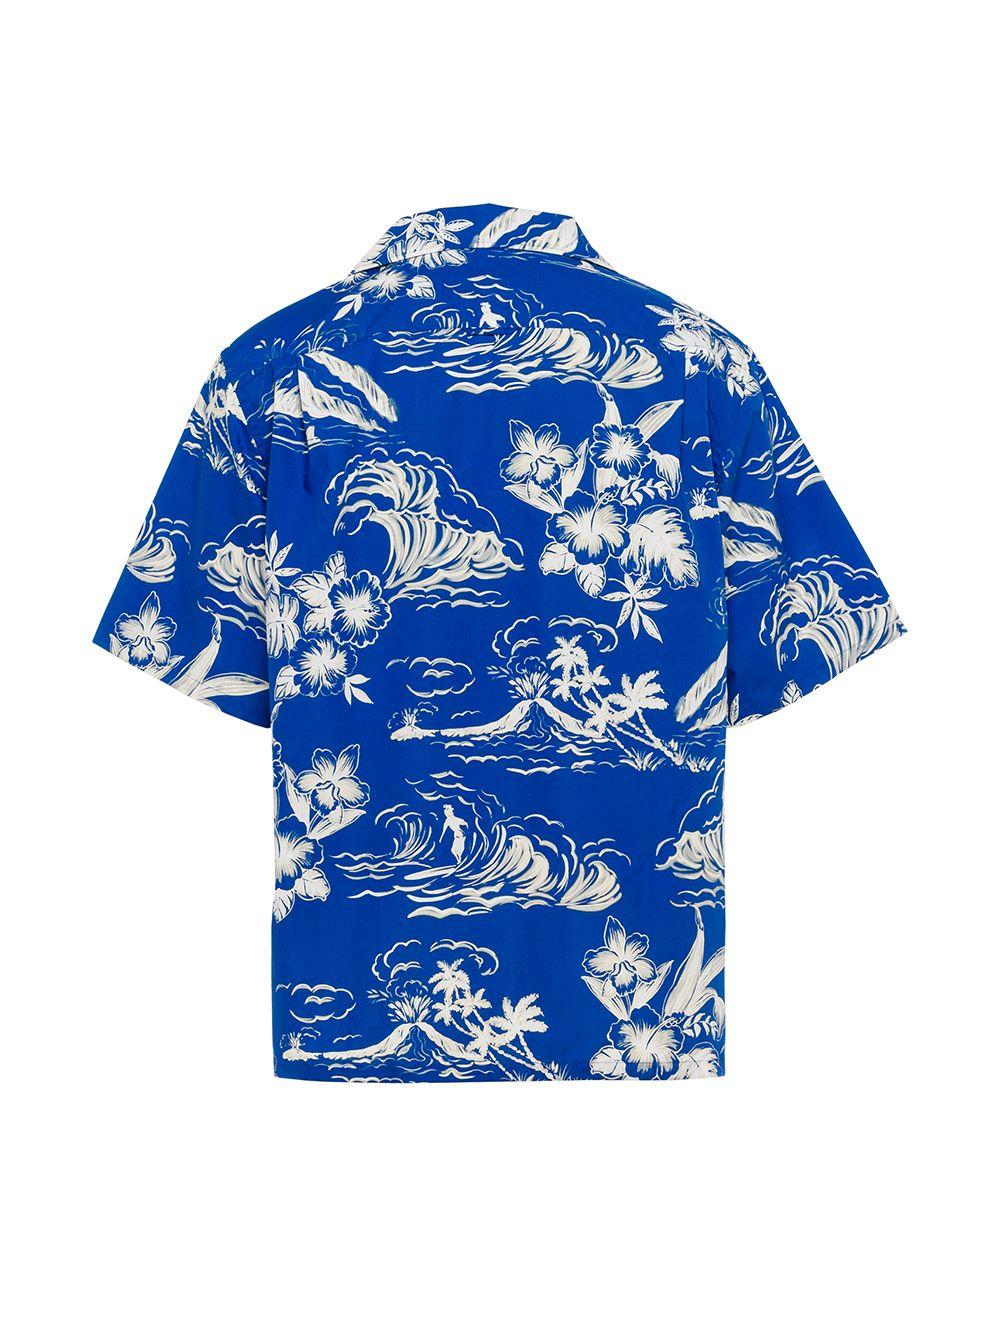 Prada Cotton Hawaii-print Shirt in Blue for Men - Lyst